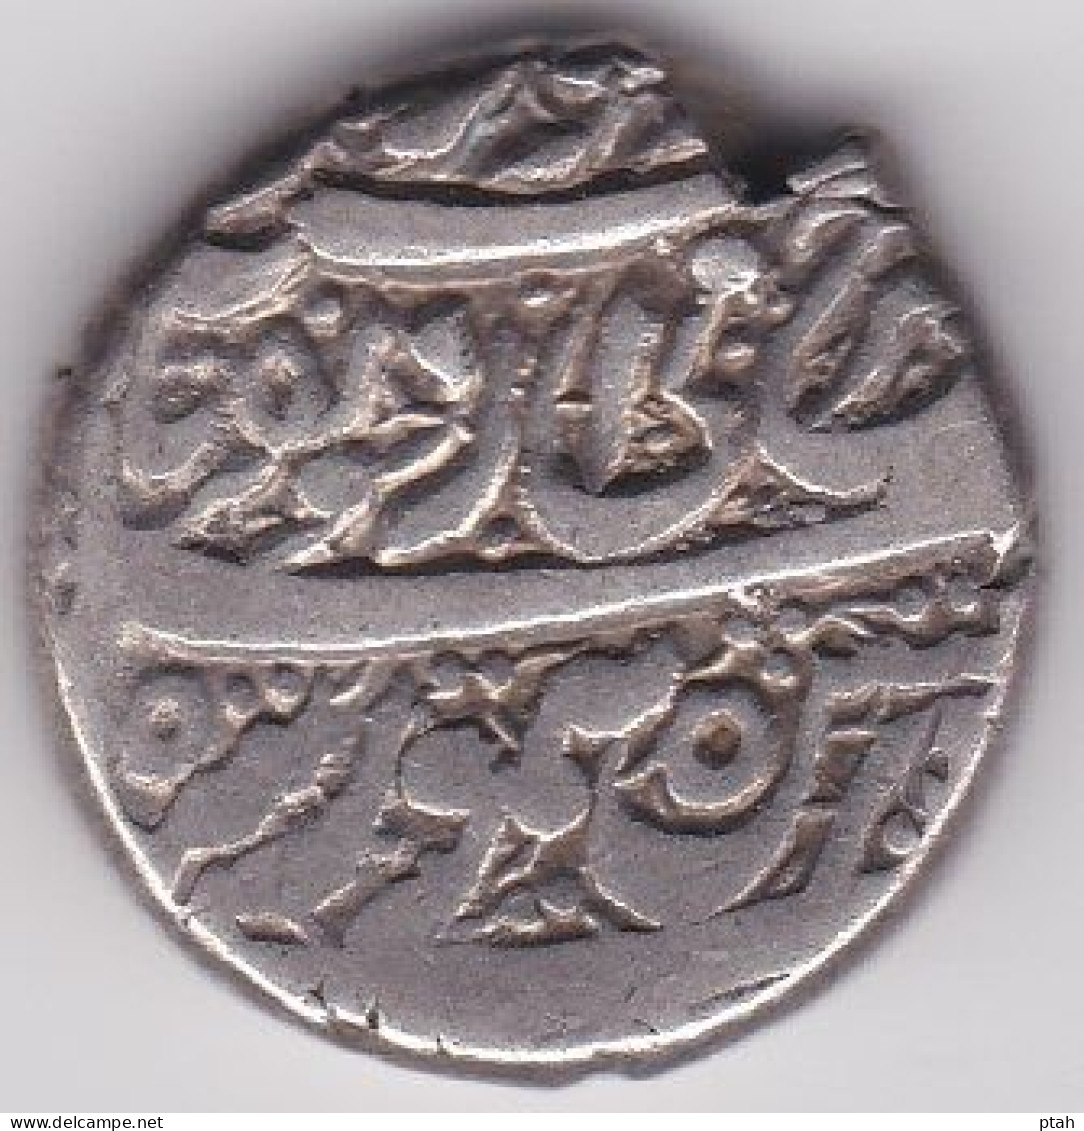 DURRANI, Taimur Shah, Rupee 1201h - Afghanistan